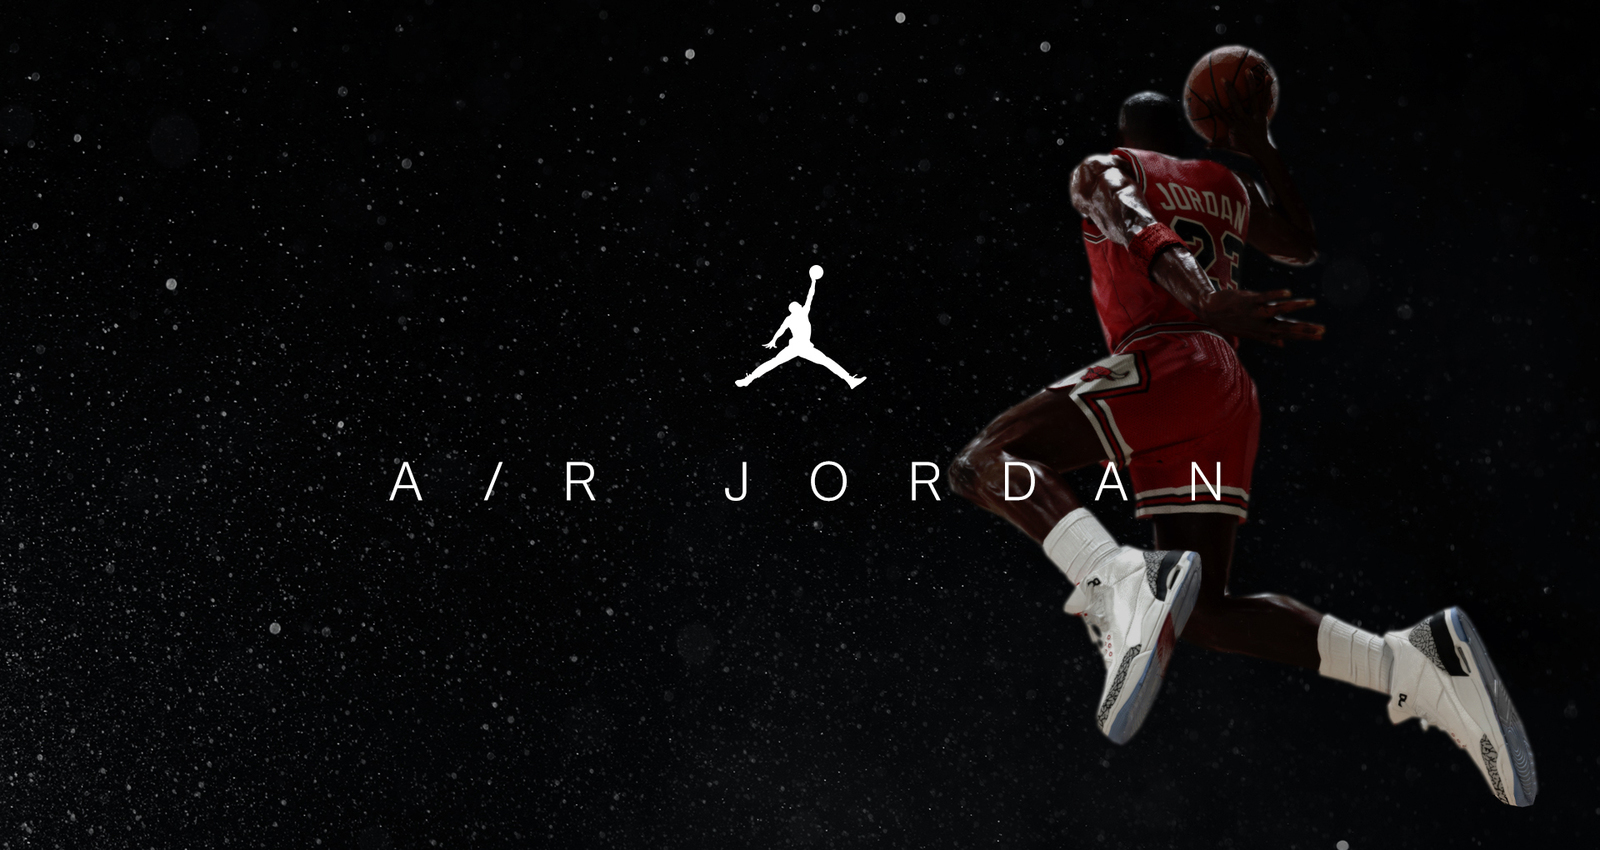 A/R Jordan